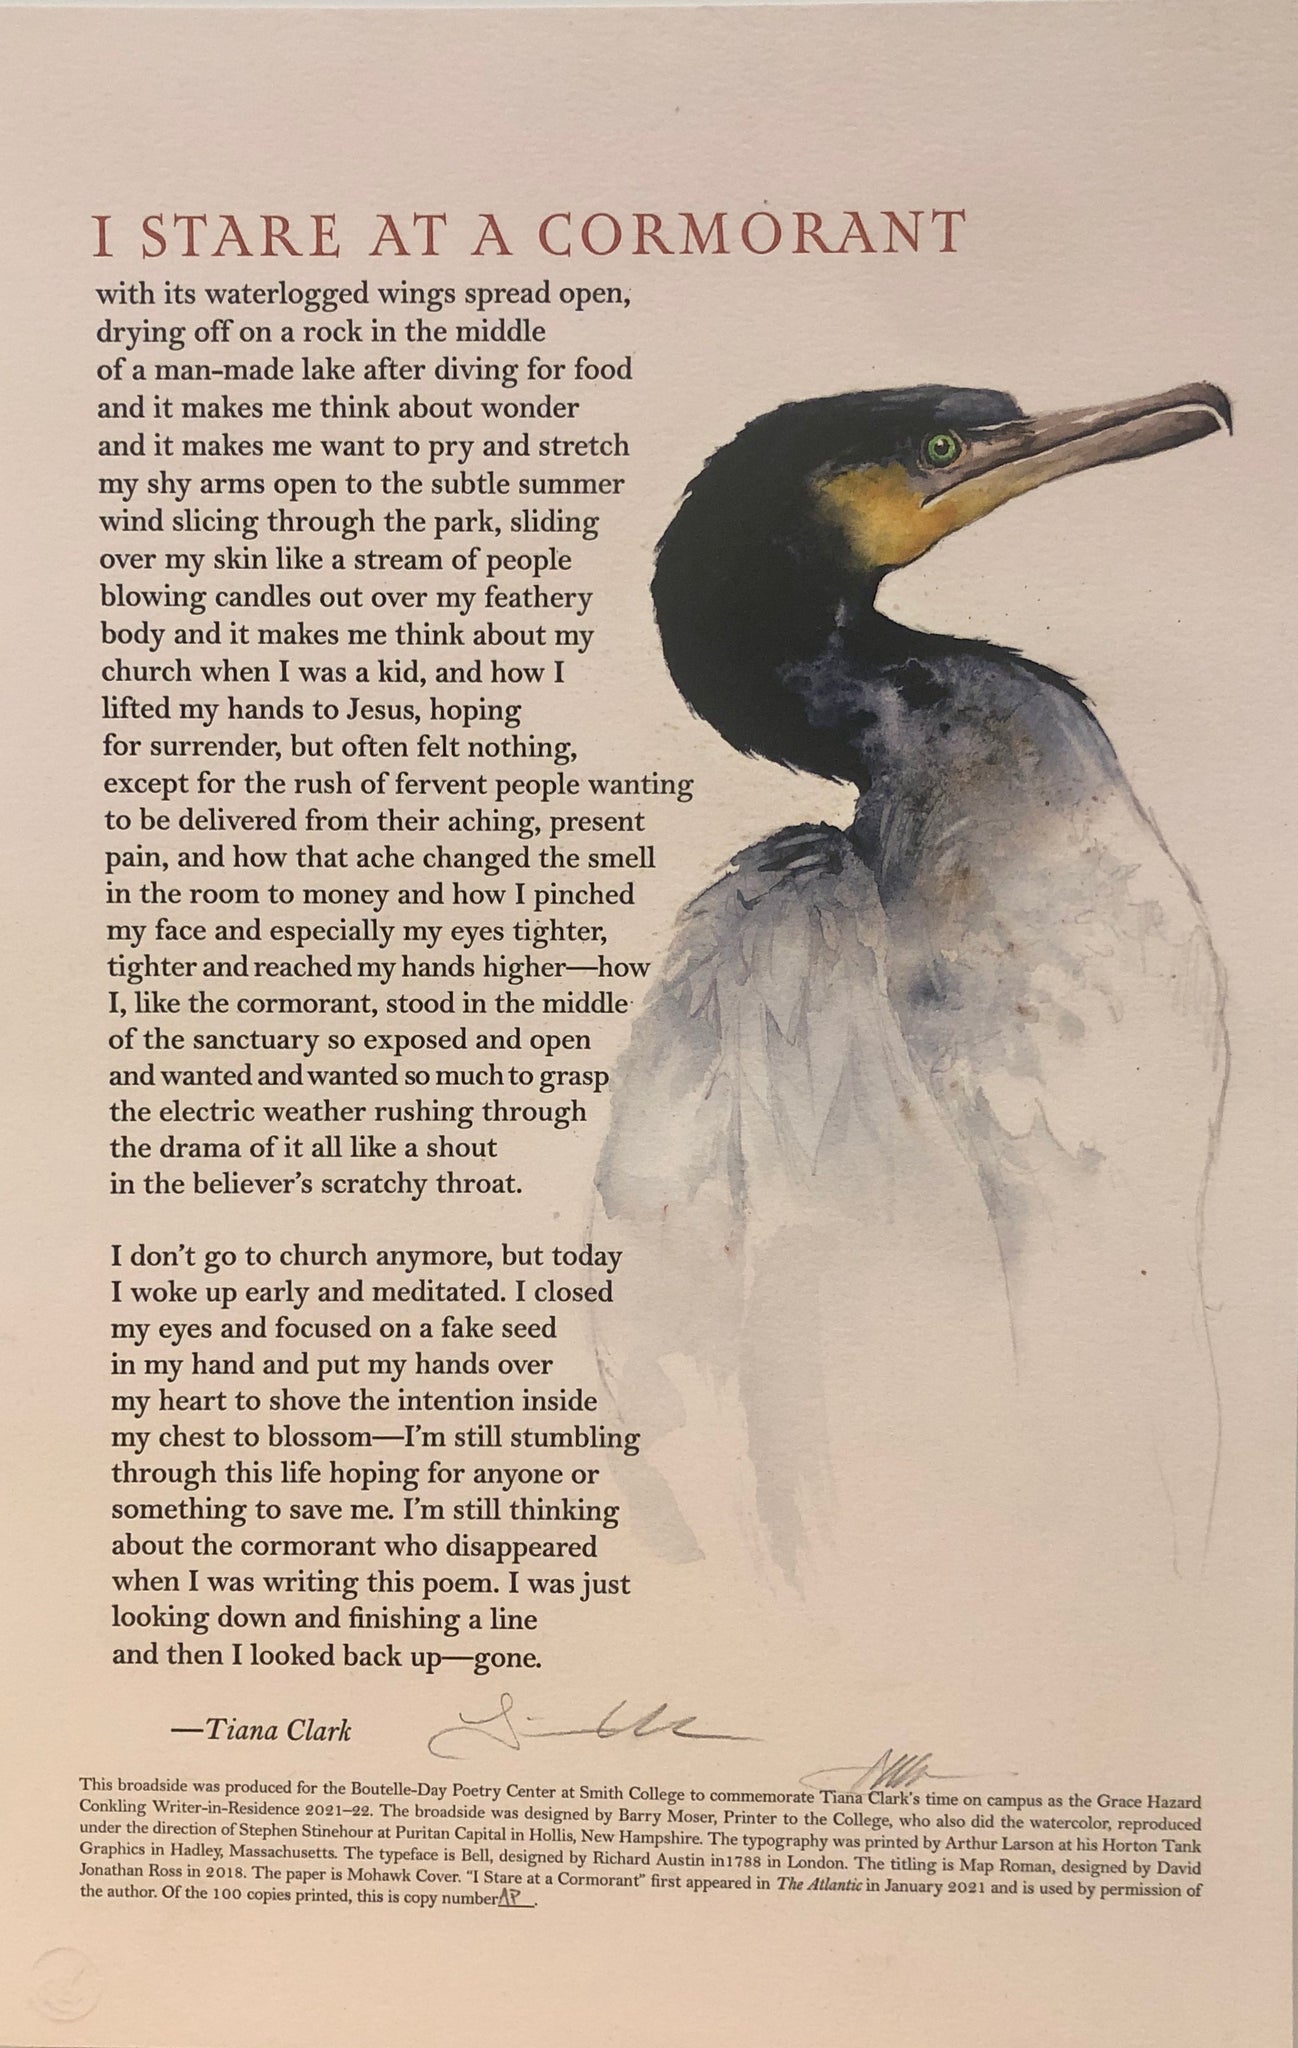 Tiana Clark “I Stare at a Cormorant" / Barry Moser Broadside